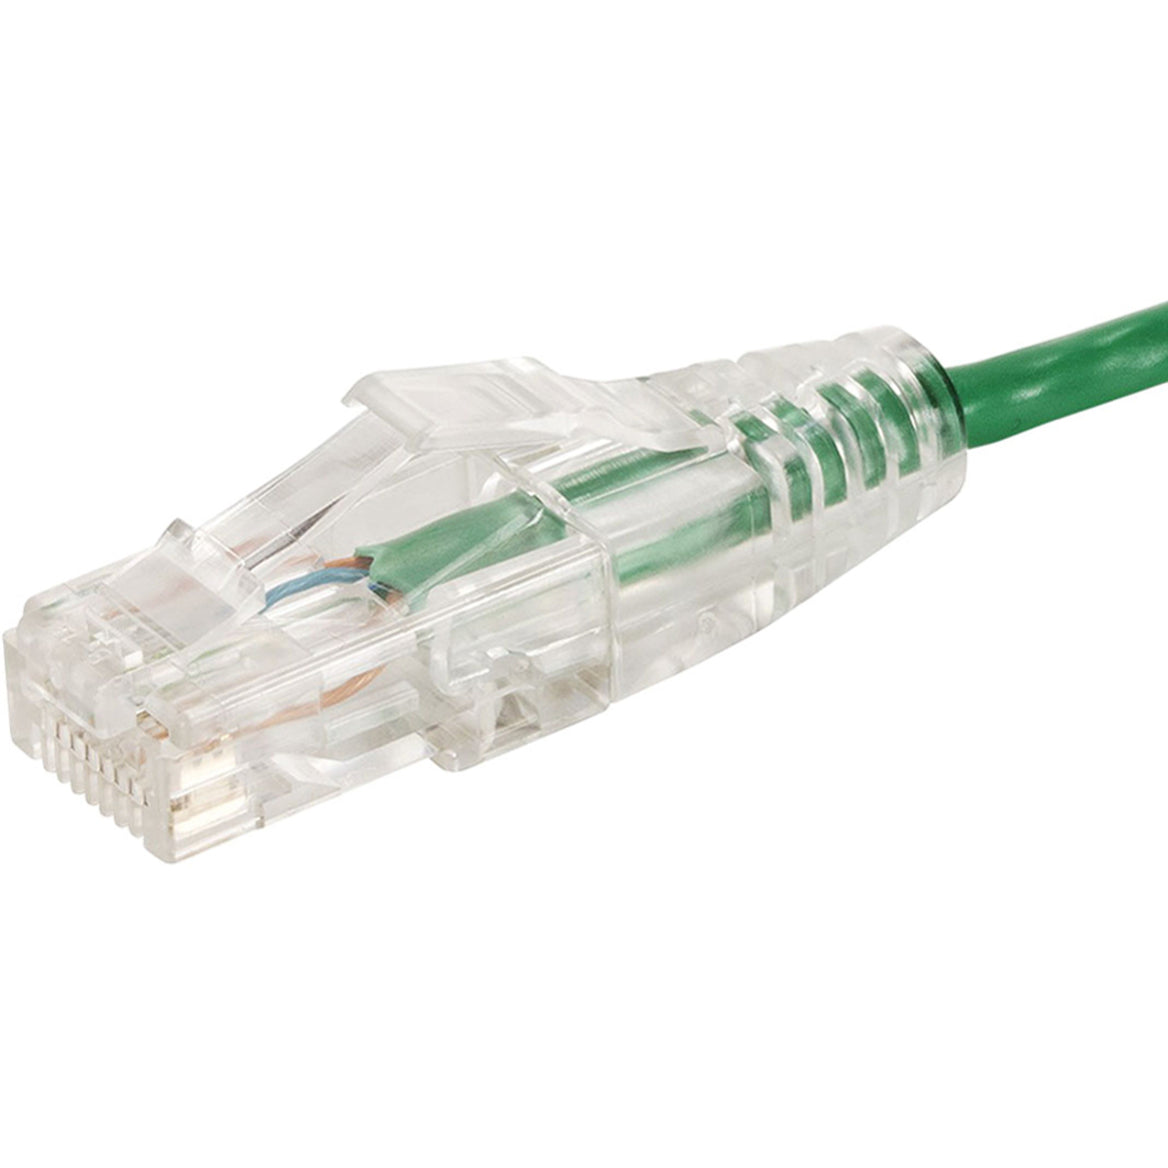 Monoprice 14808 SlimRun Cat6 28AWG UTP Ethernet Network Cable, 3ft Green, Flexible, Snagless